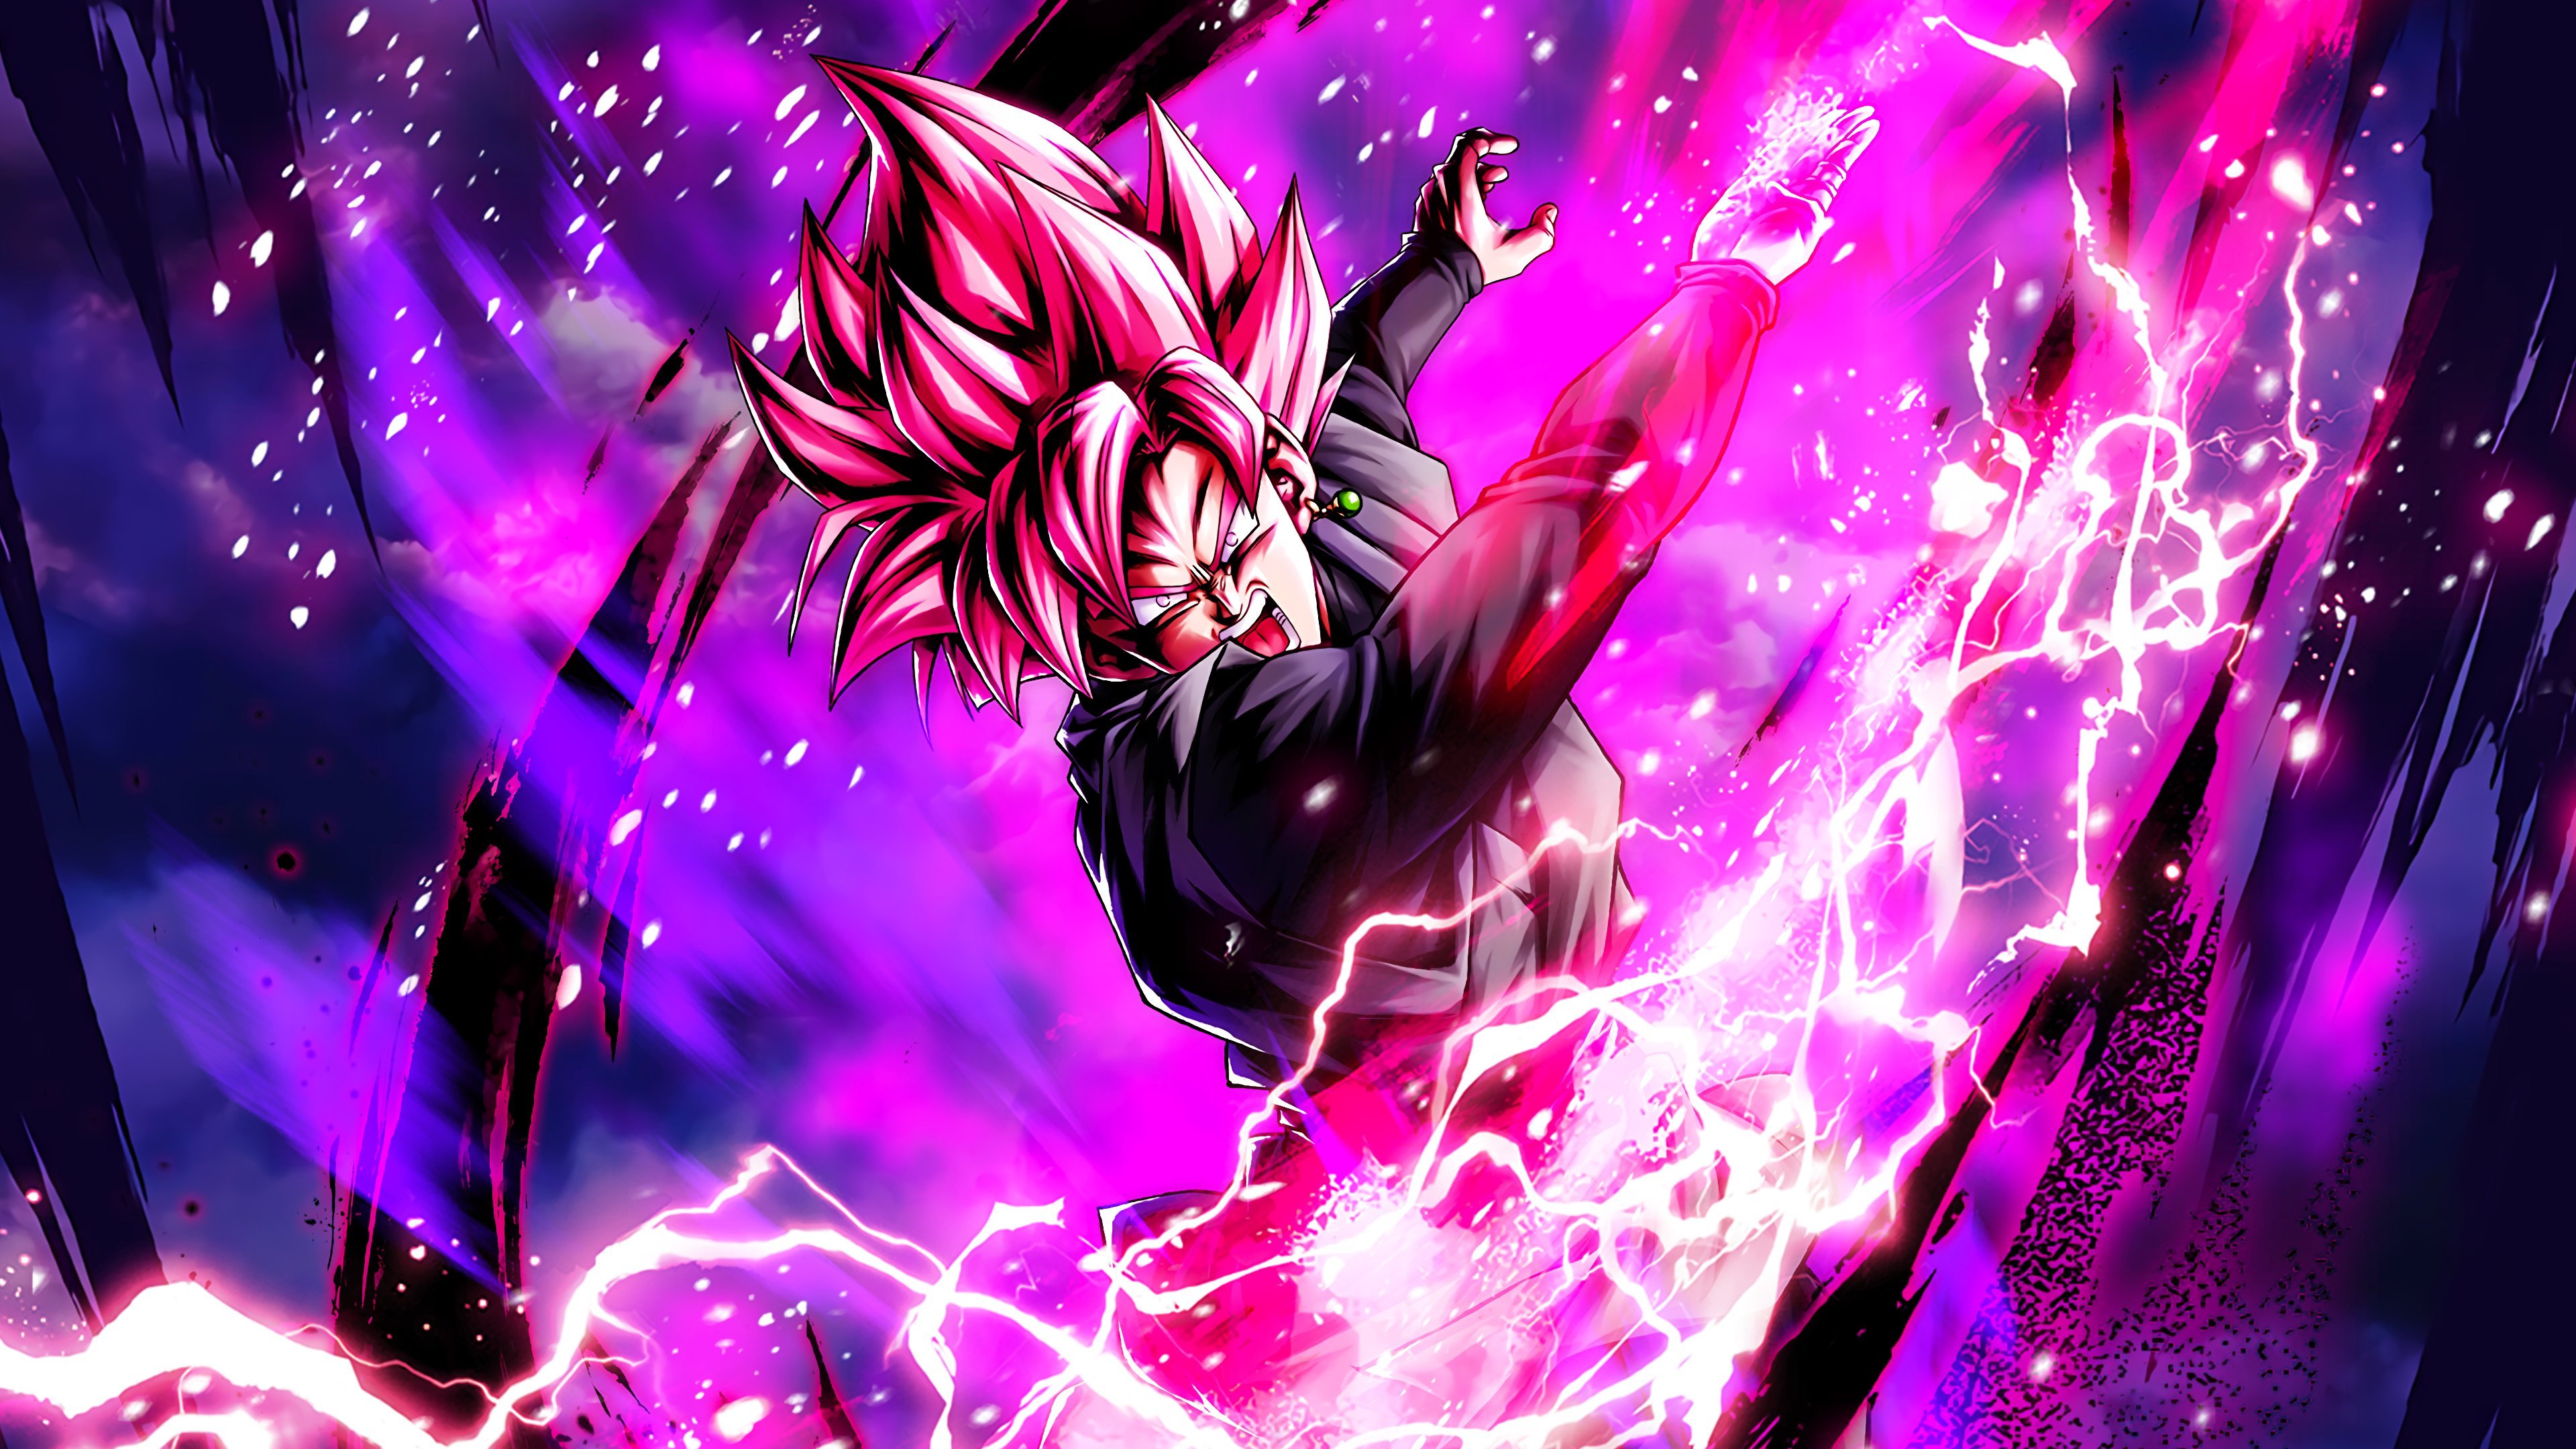 Hydros Goku Black (Rose) (PostTransformation) Character Art + 4K PC Wallpaper + 4K Phone Wallpaper! #DBLegends #DragonBallLegends